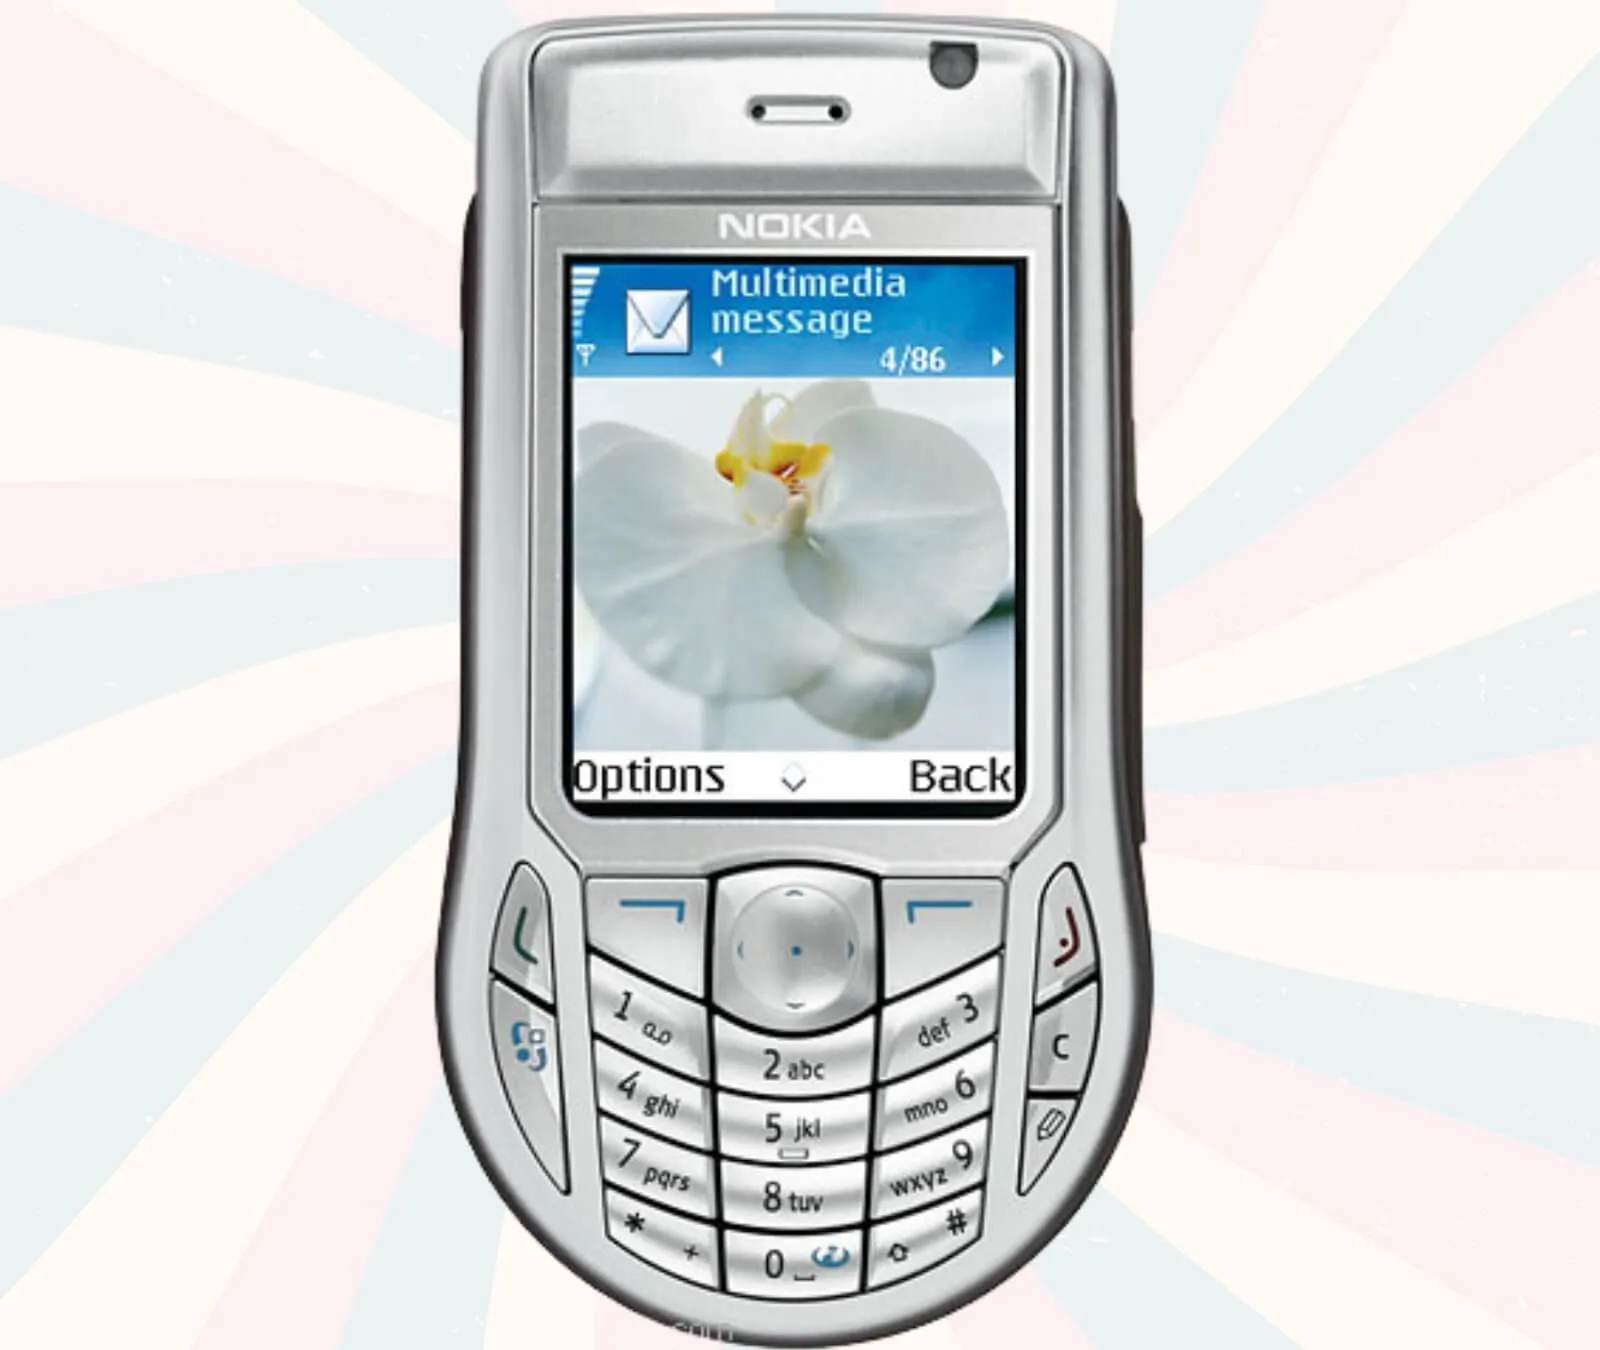 Nokia 6630 smartphone